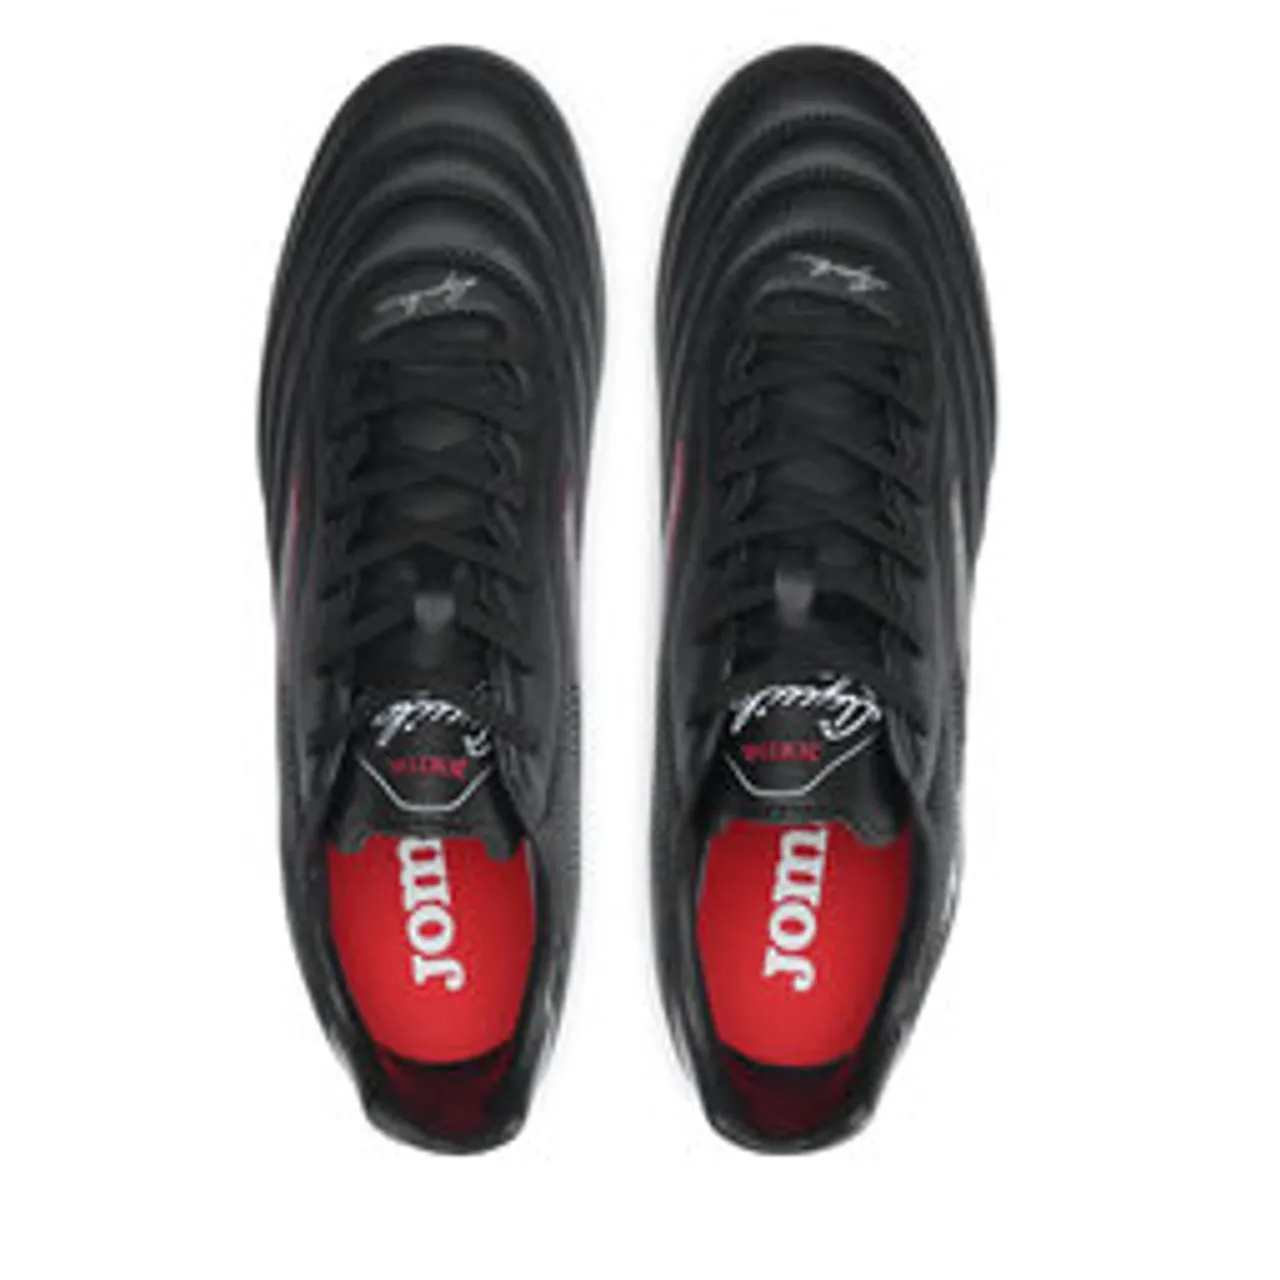 Schuhe Joma Aguila 2301 AGUW2301FG Black Red